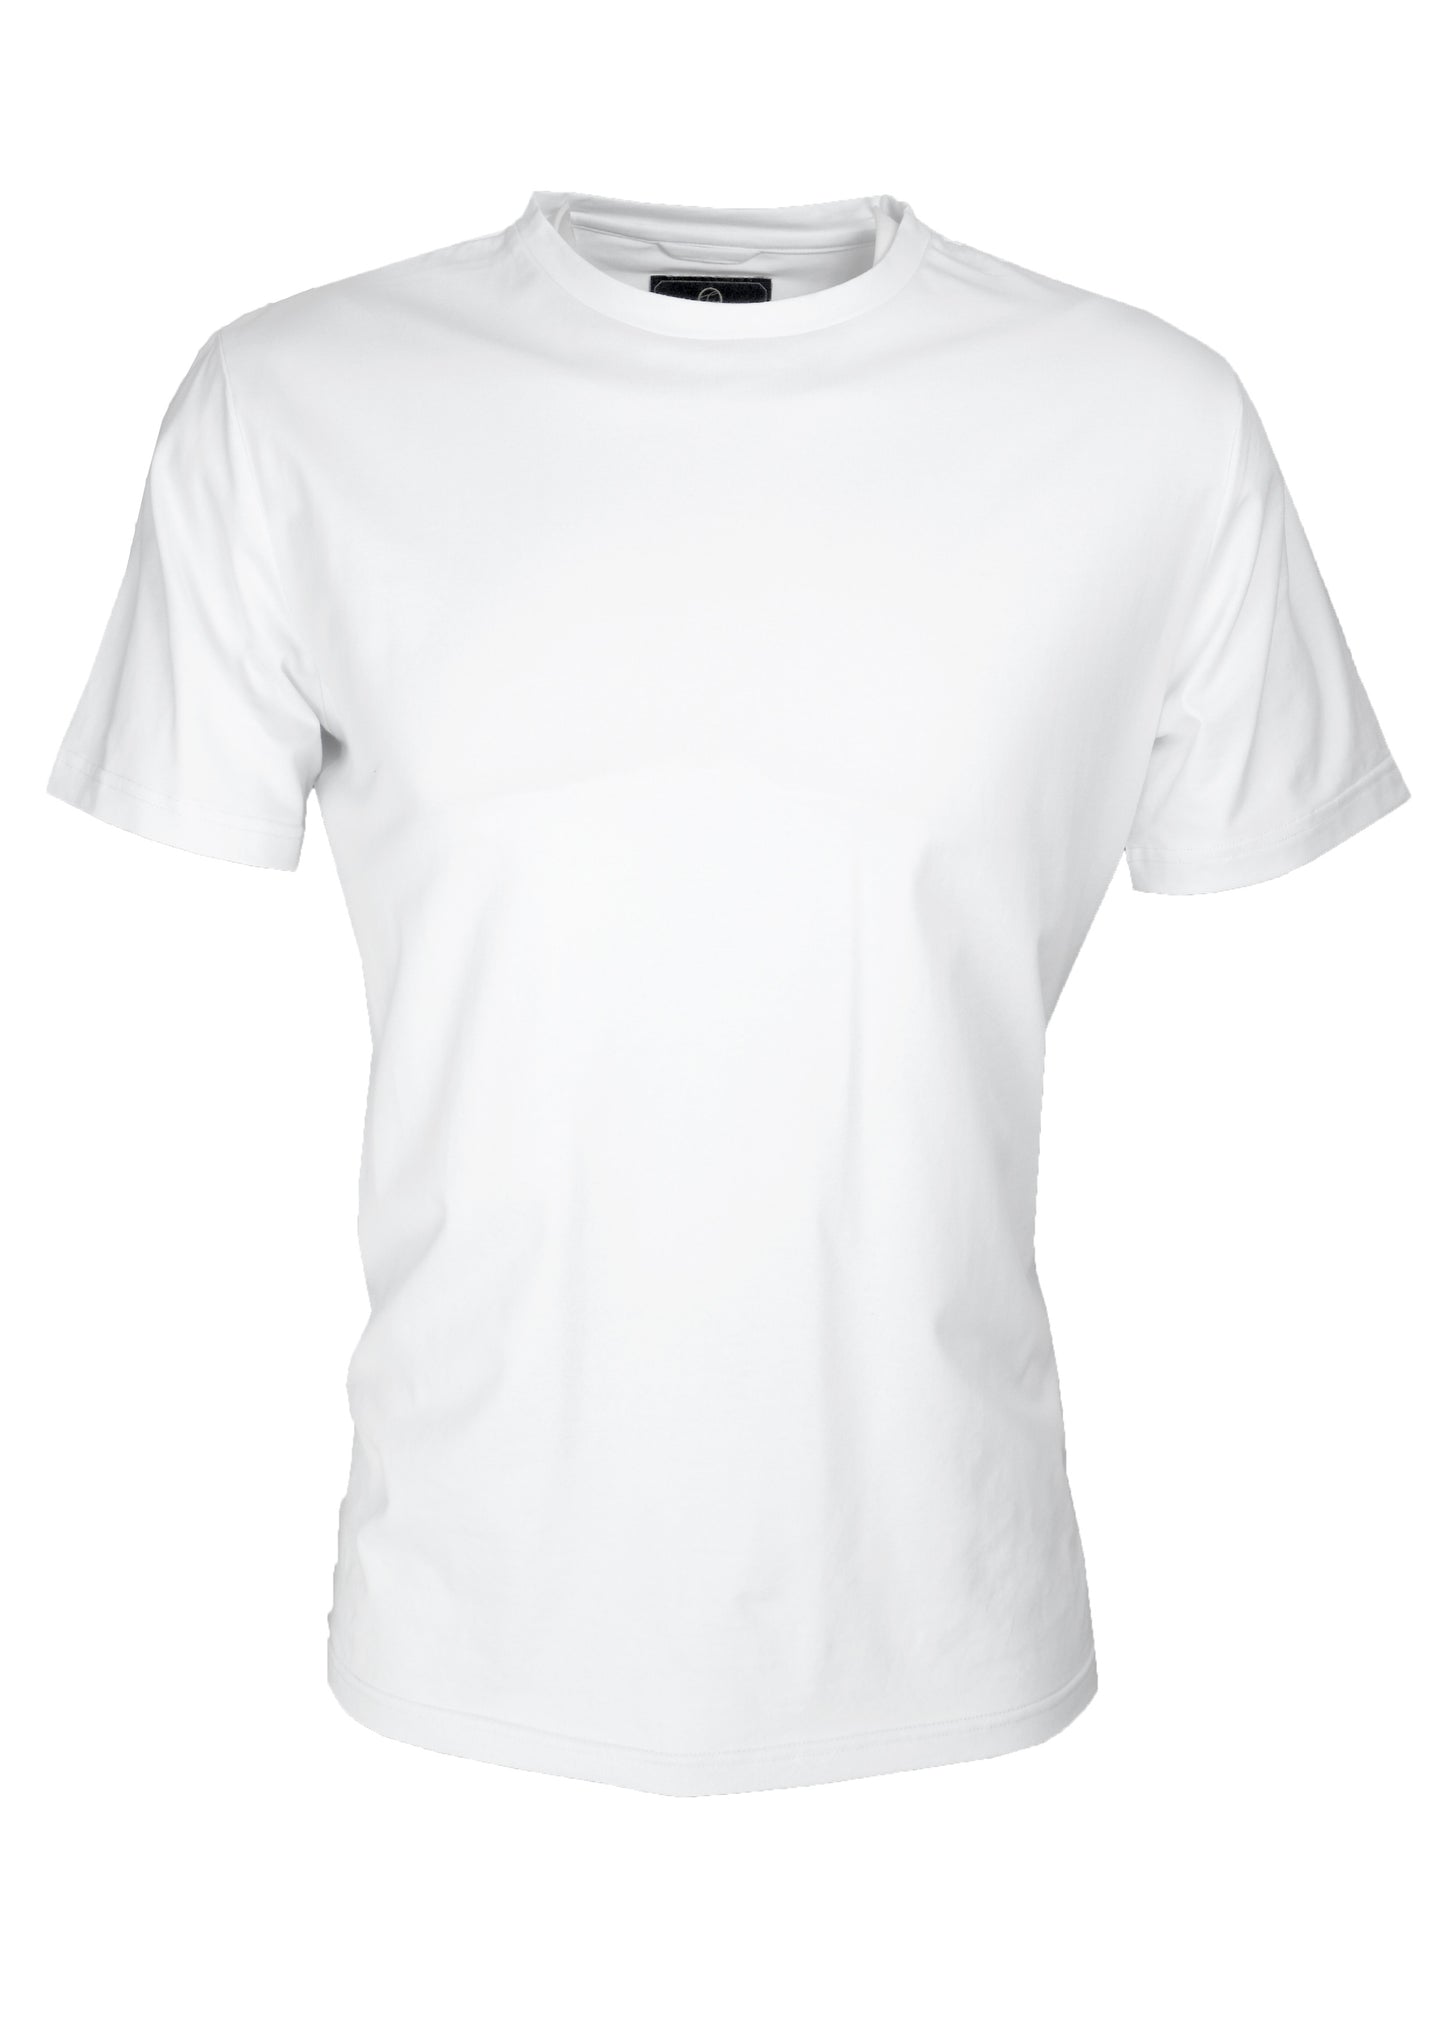 Cutler & Co - Oakley T-Shirt - Three Colour Options